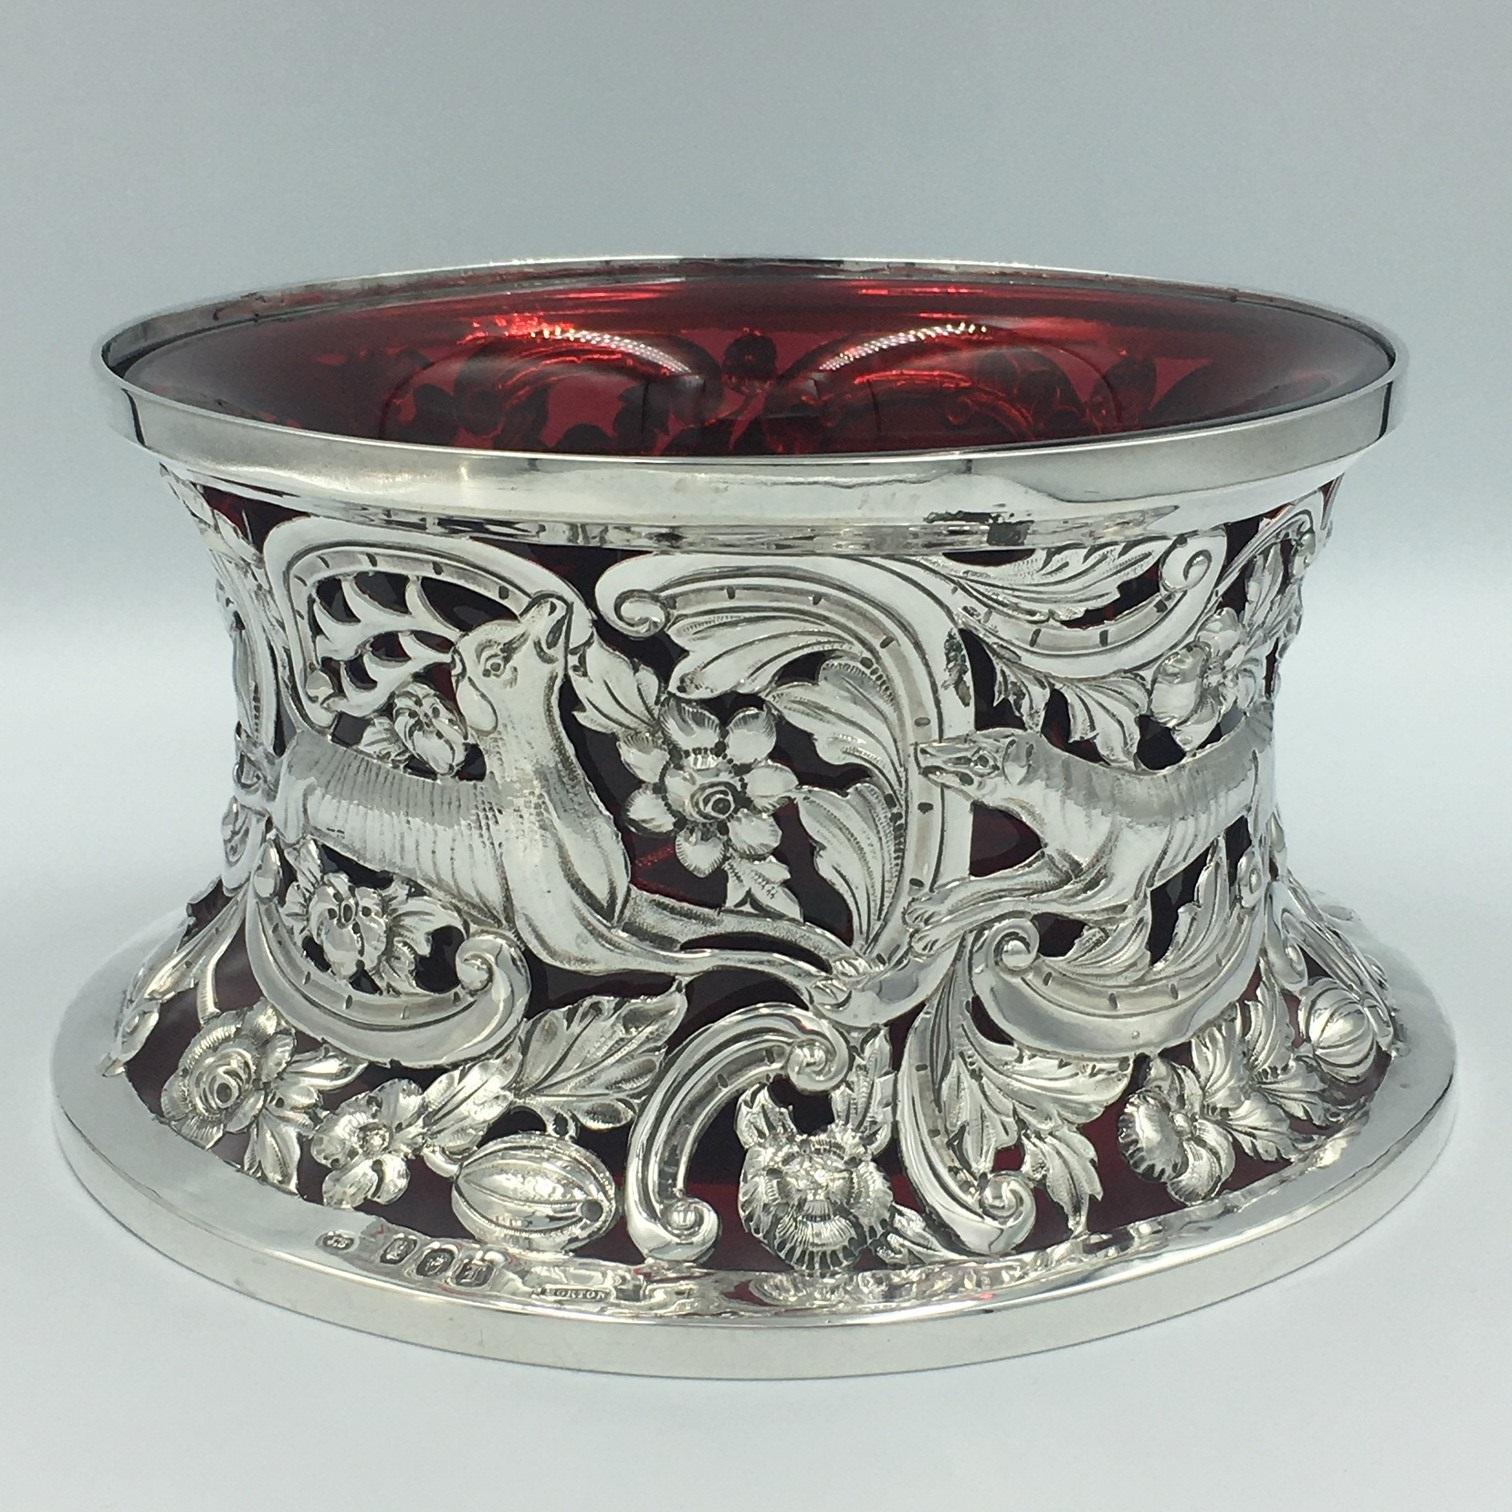 Irish silver dish ring with red liner. John Smith Dublin 1906.
Measures: Height 11cm, diameter 20.5cm.